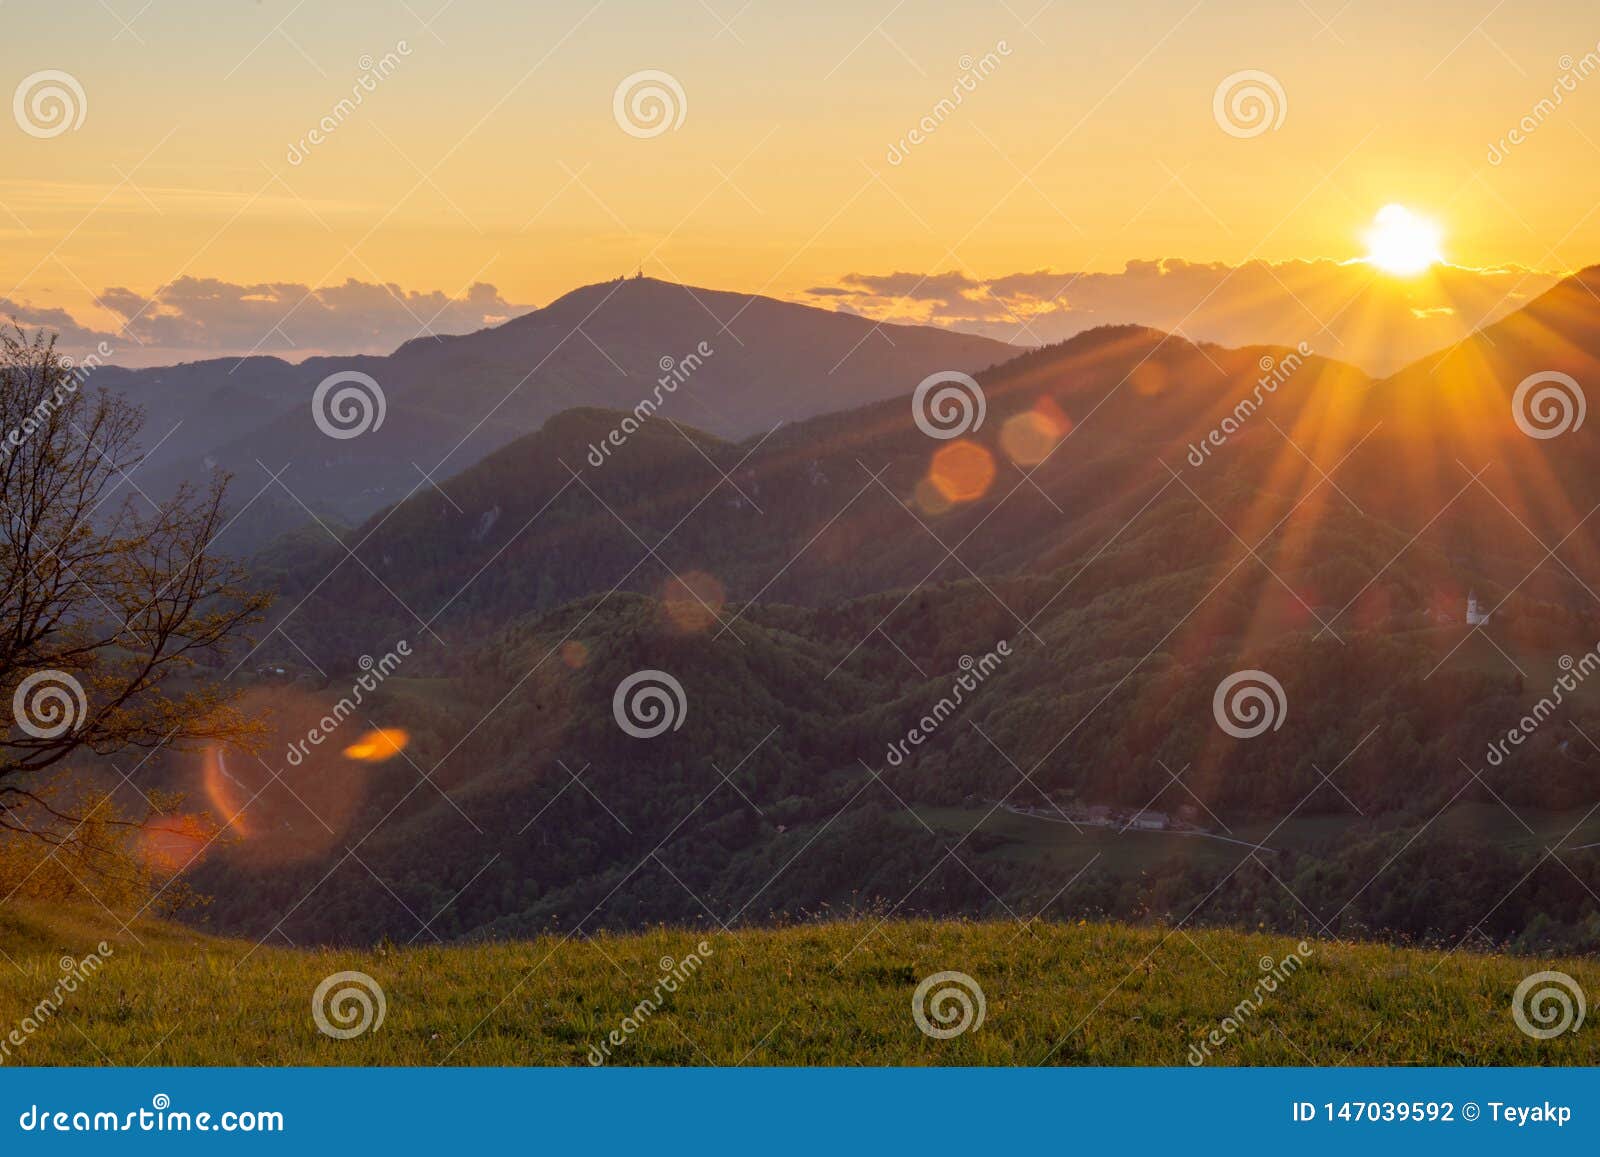 sunset over the slovenian landscape